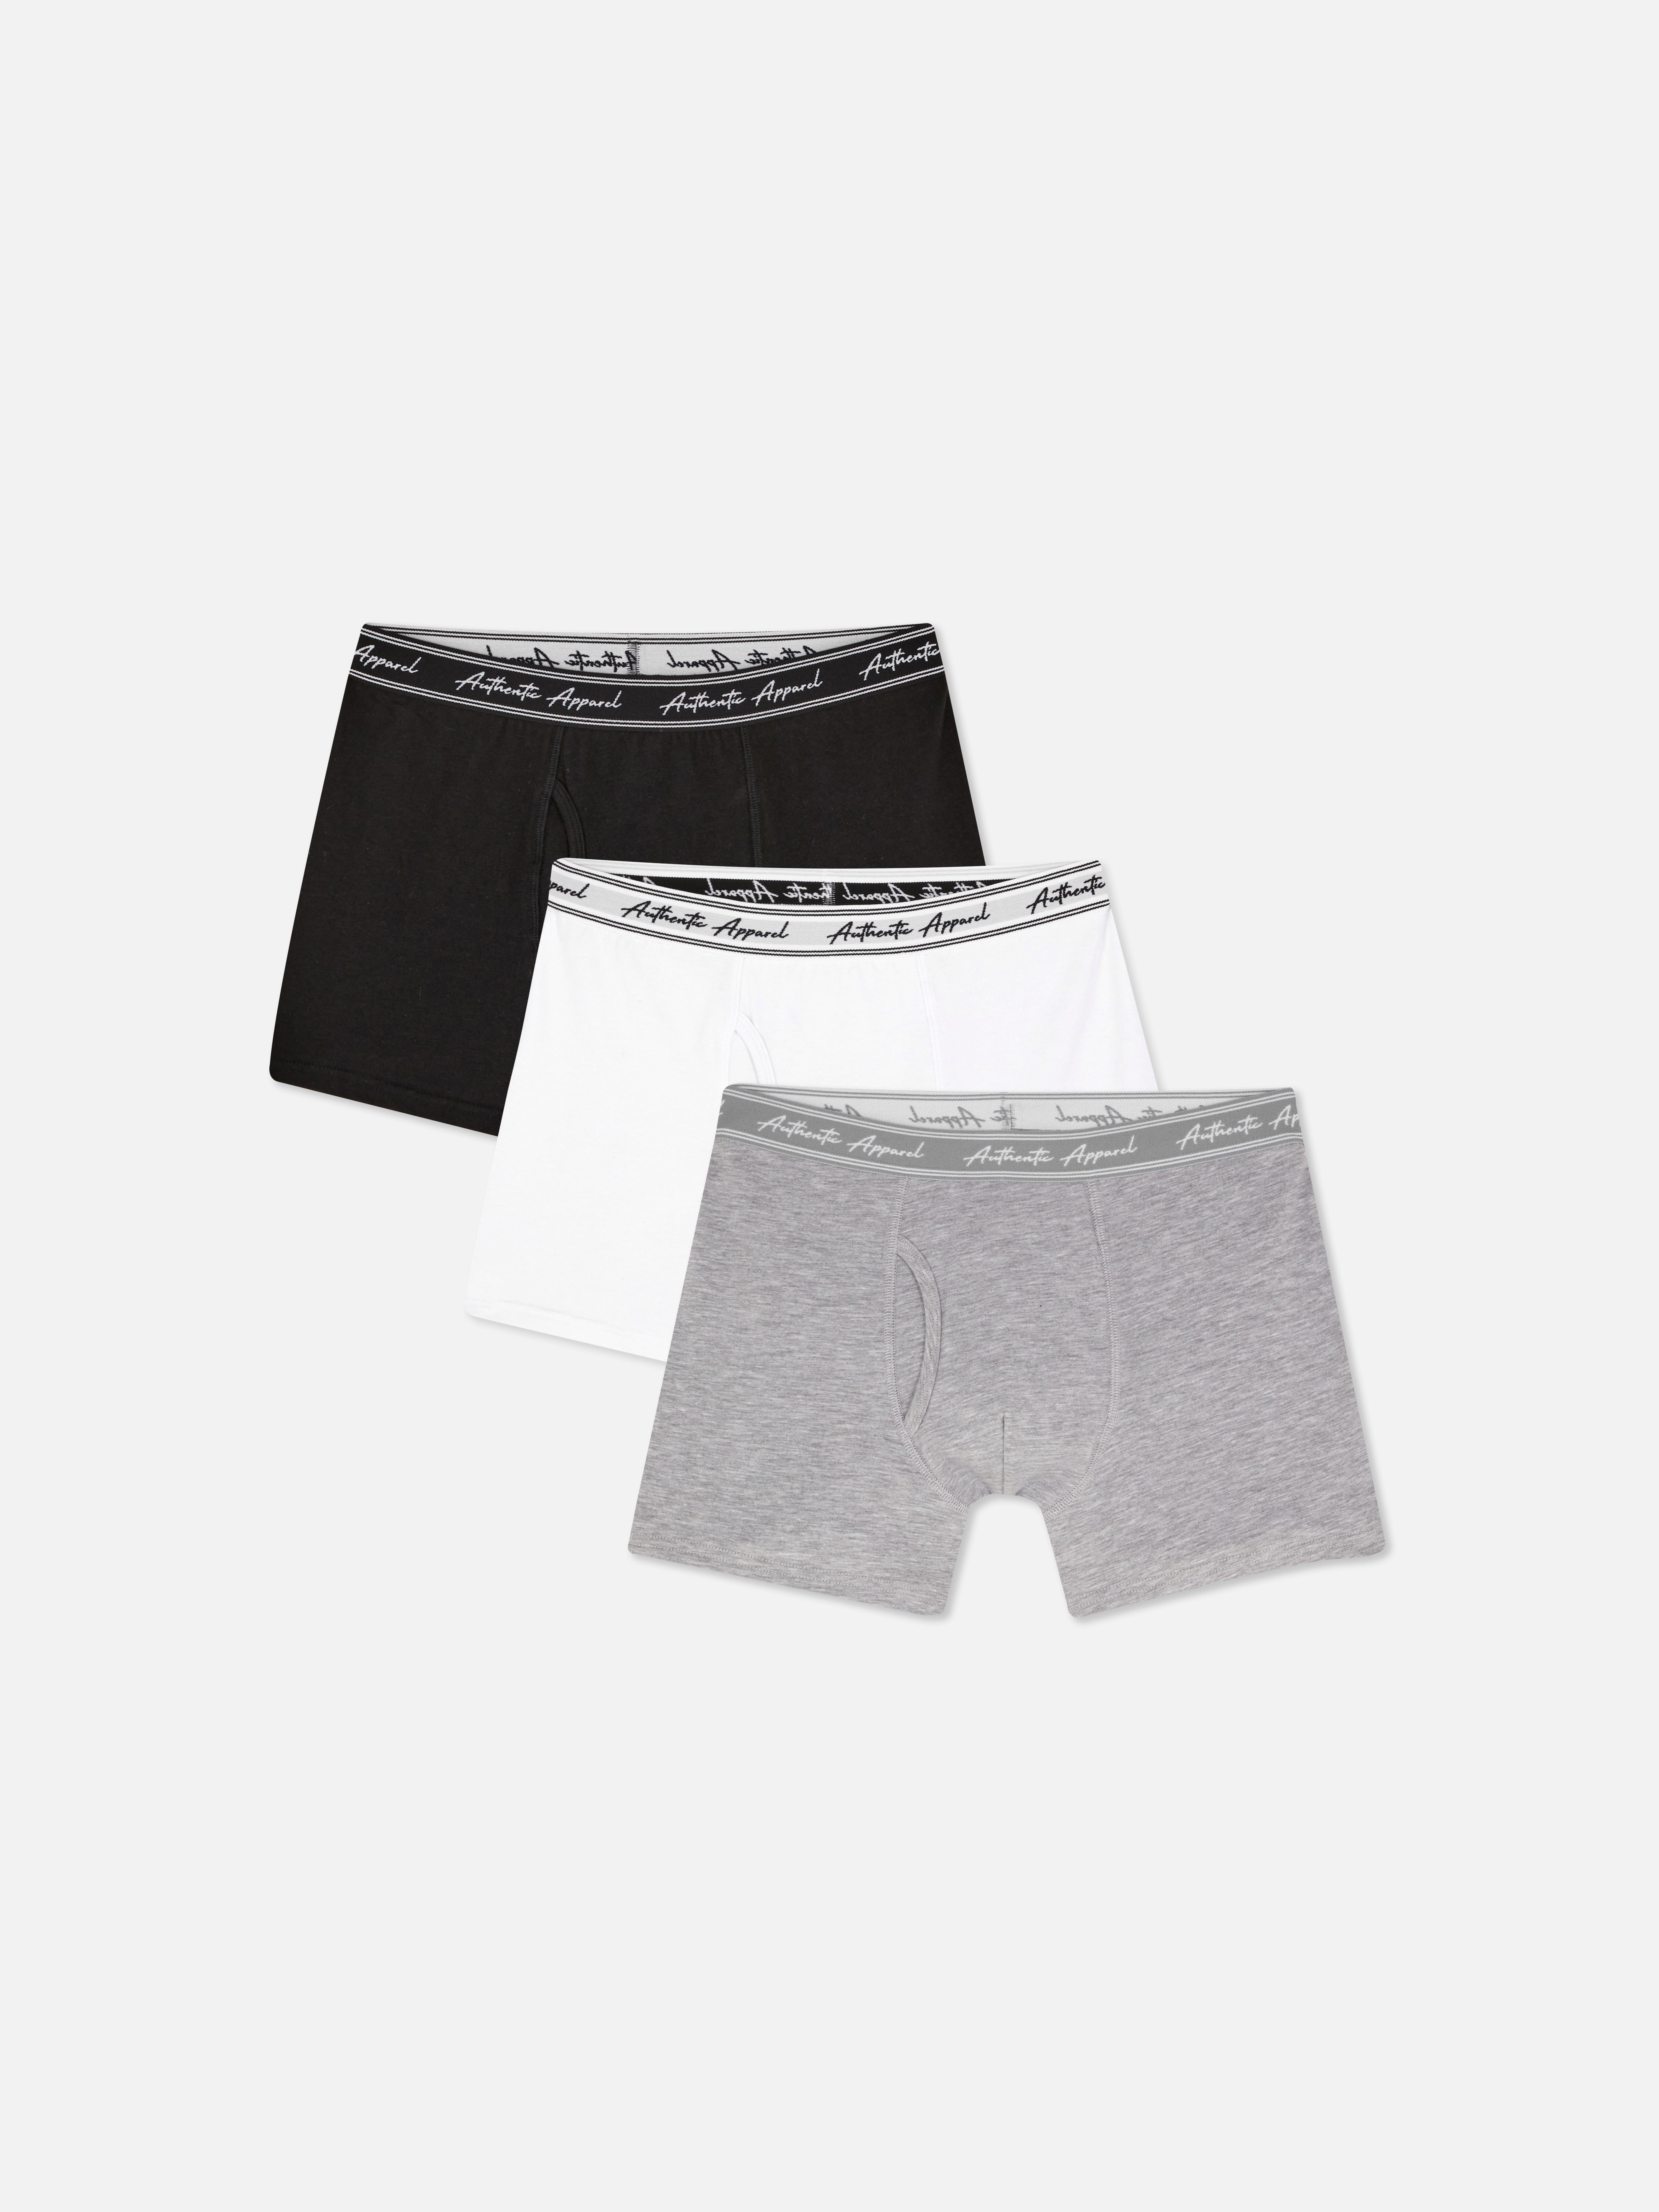 Primark, Underwear & Socks, Primark Woven Boxers Cotton Rich